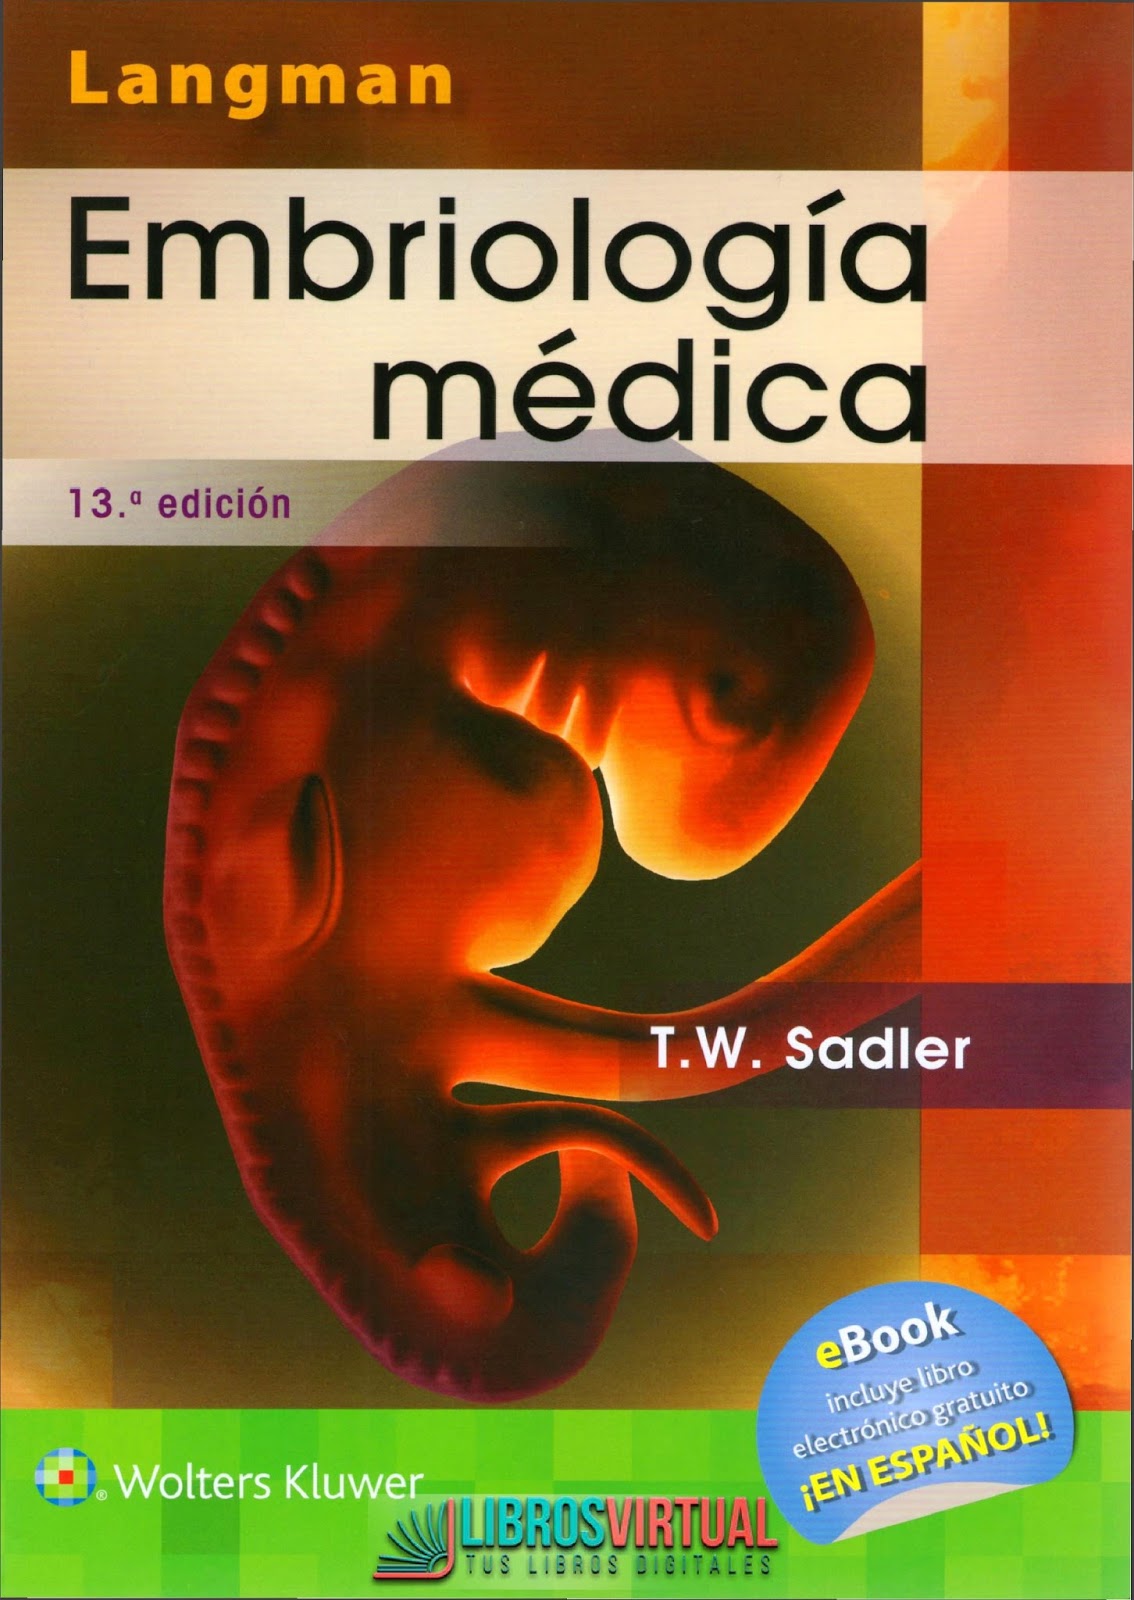 Embriologia de langman 9 edicion pdf gratis